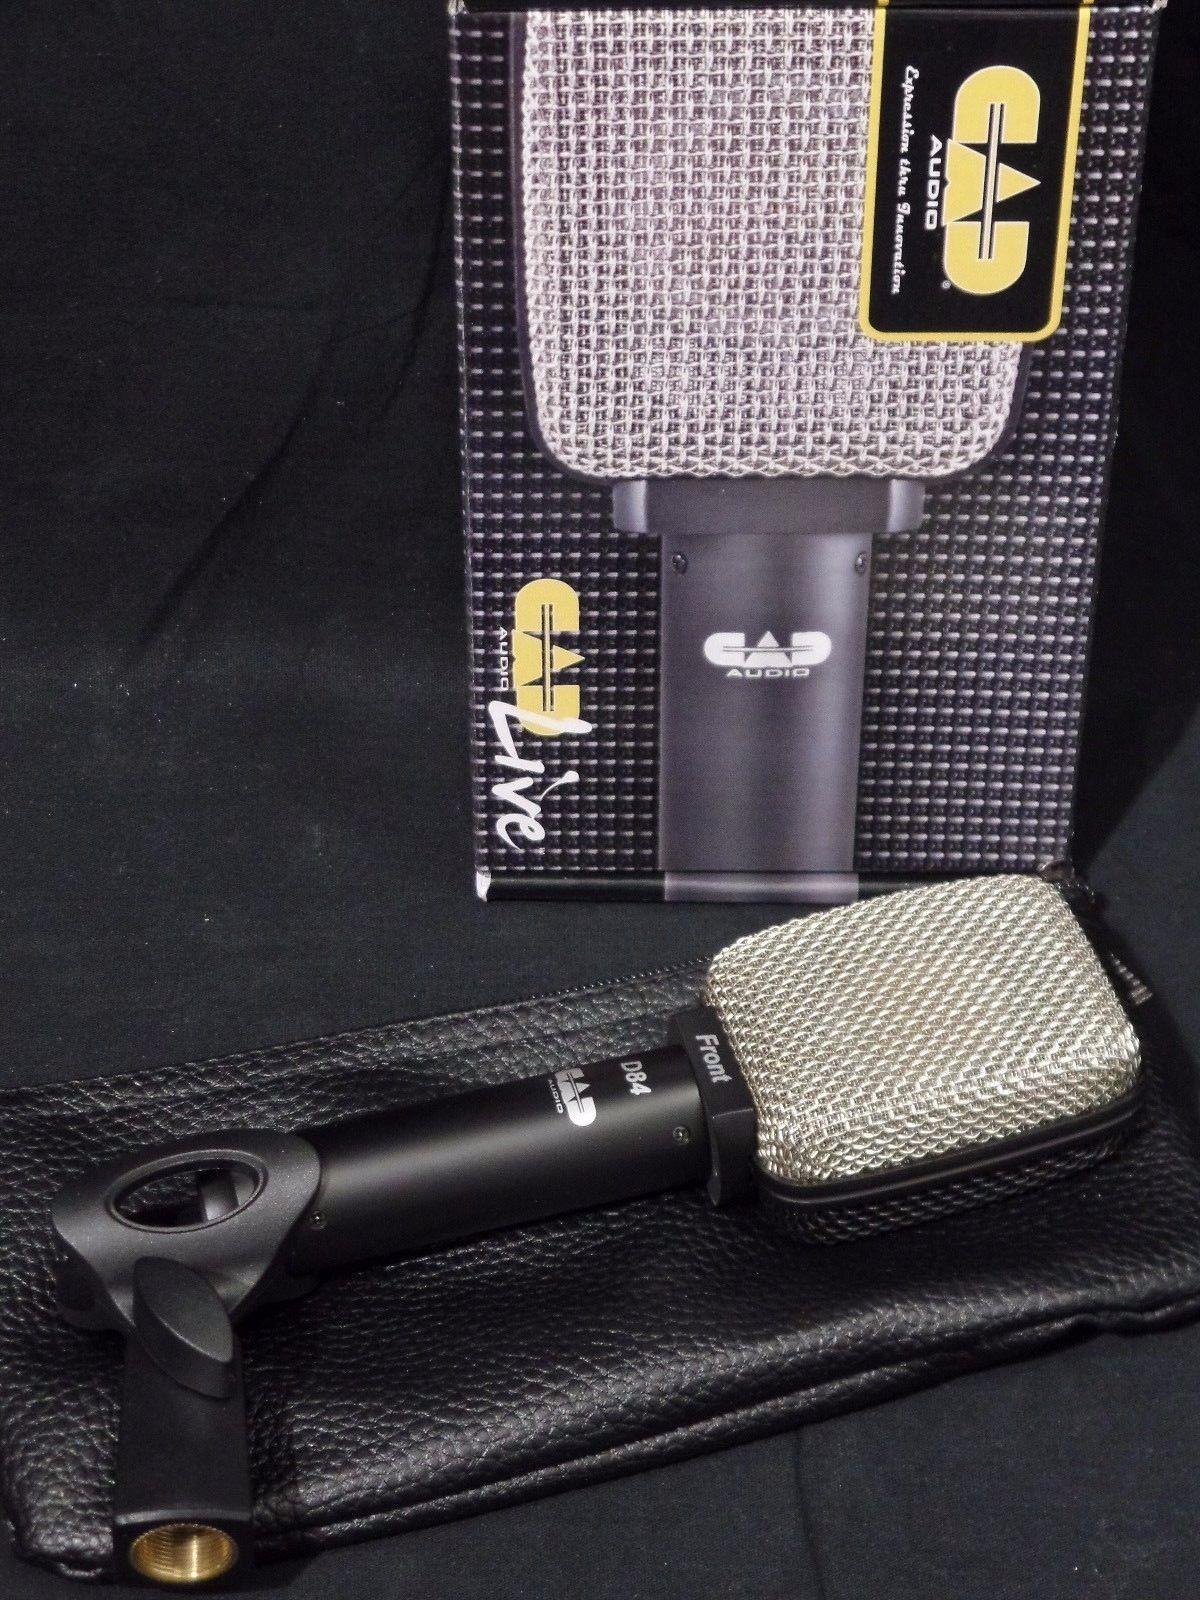 CAD Audio Live D84 Large Diaphragm Condenser Microphone Instrument Vocal